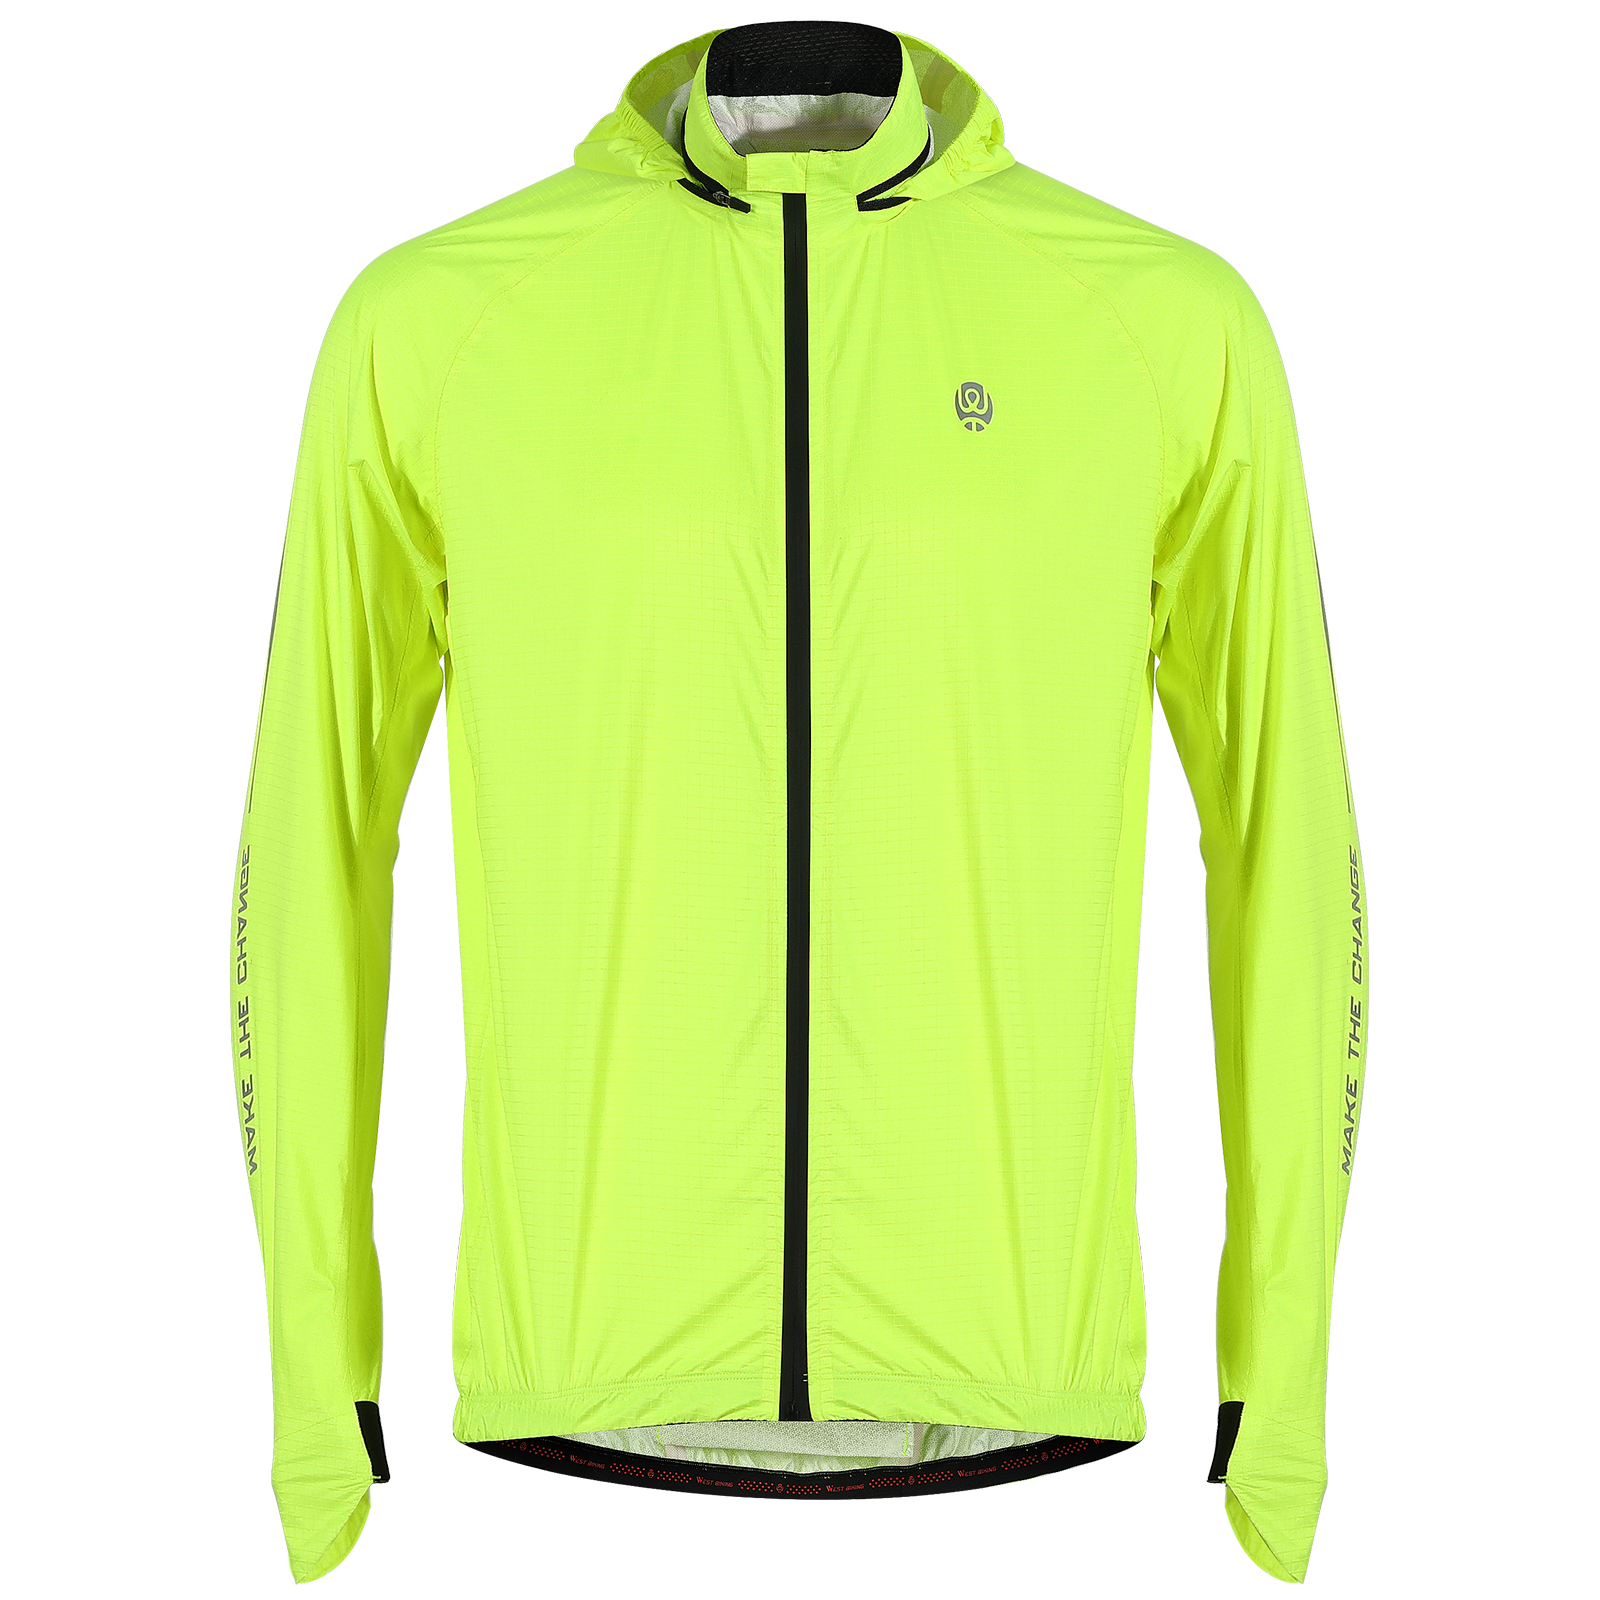 WEST BIKING Outdoor Jacket Windproof Sports Cycling Casual Coat for Men Women, Green L - image 2 of 10